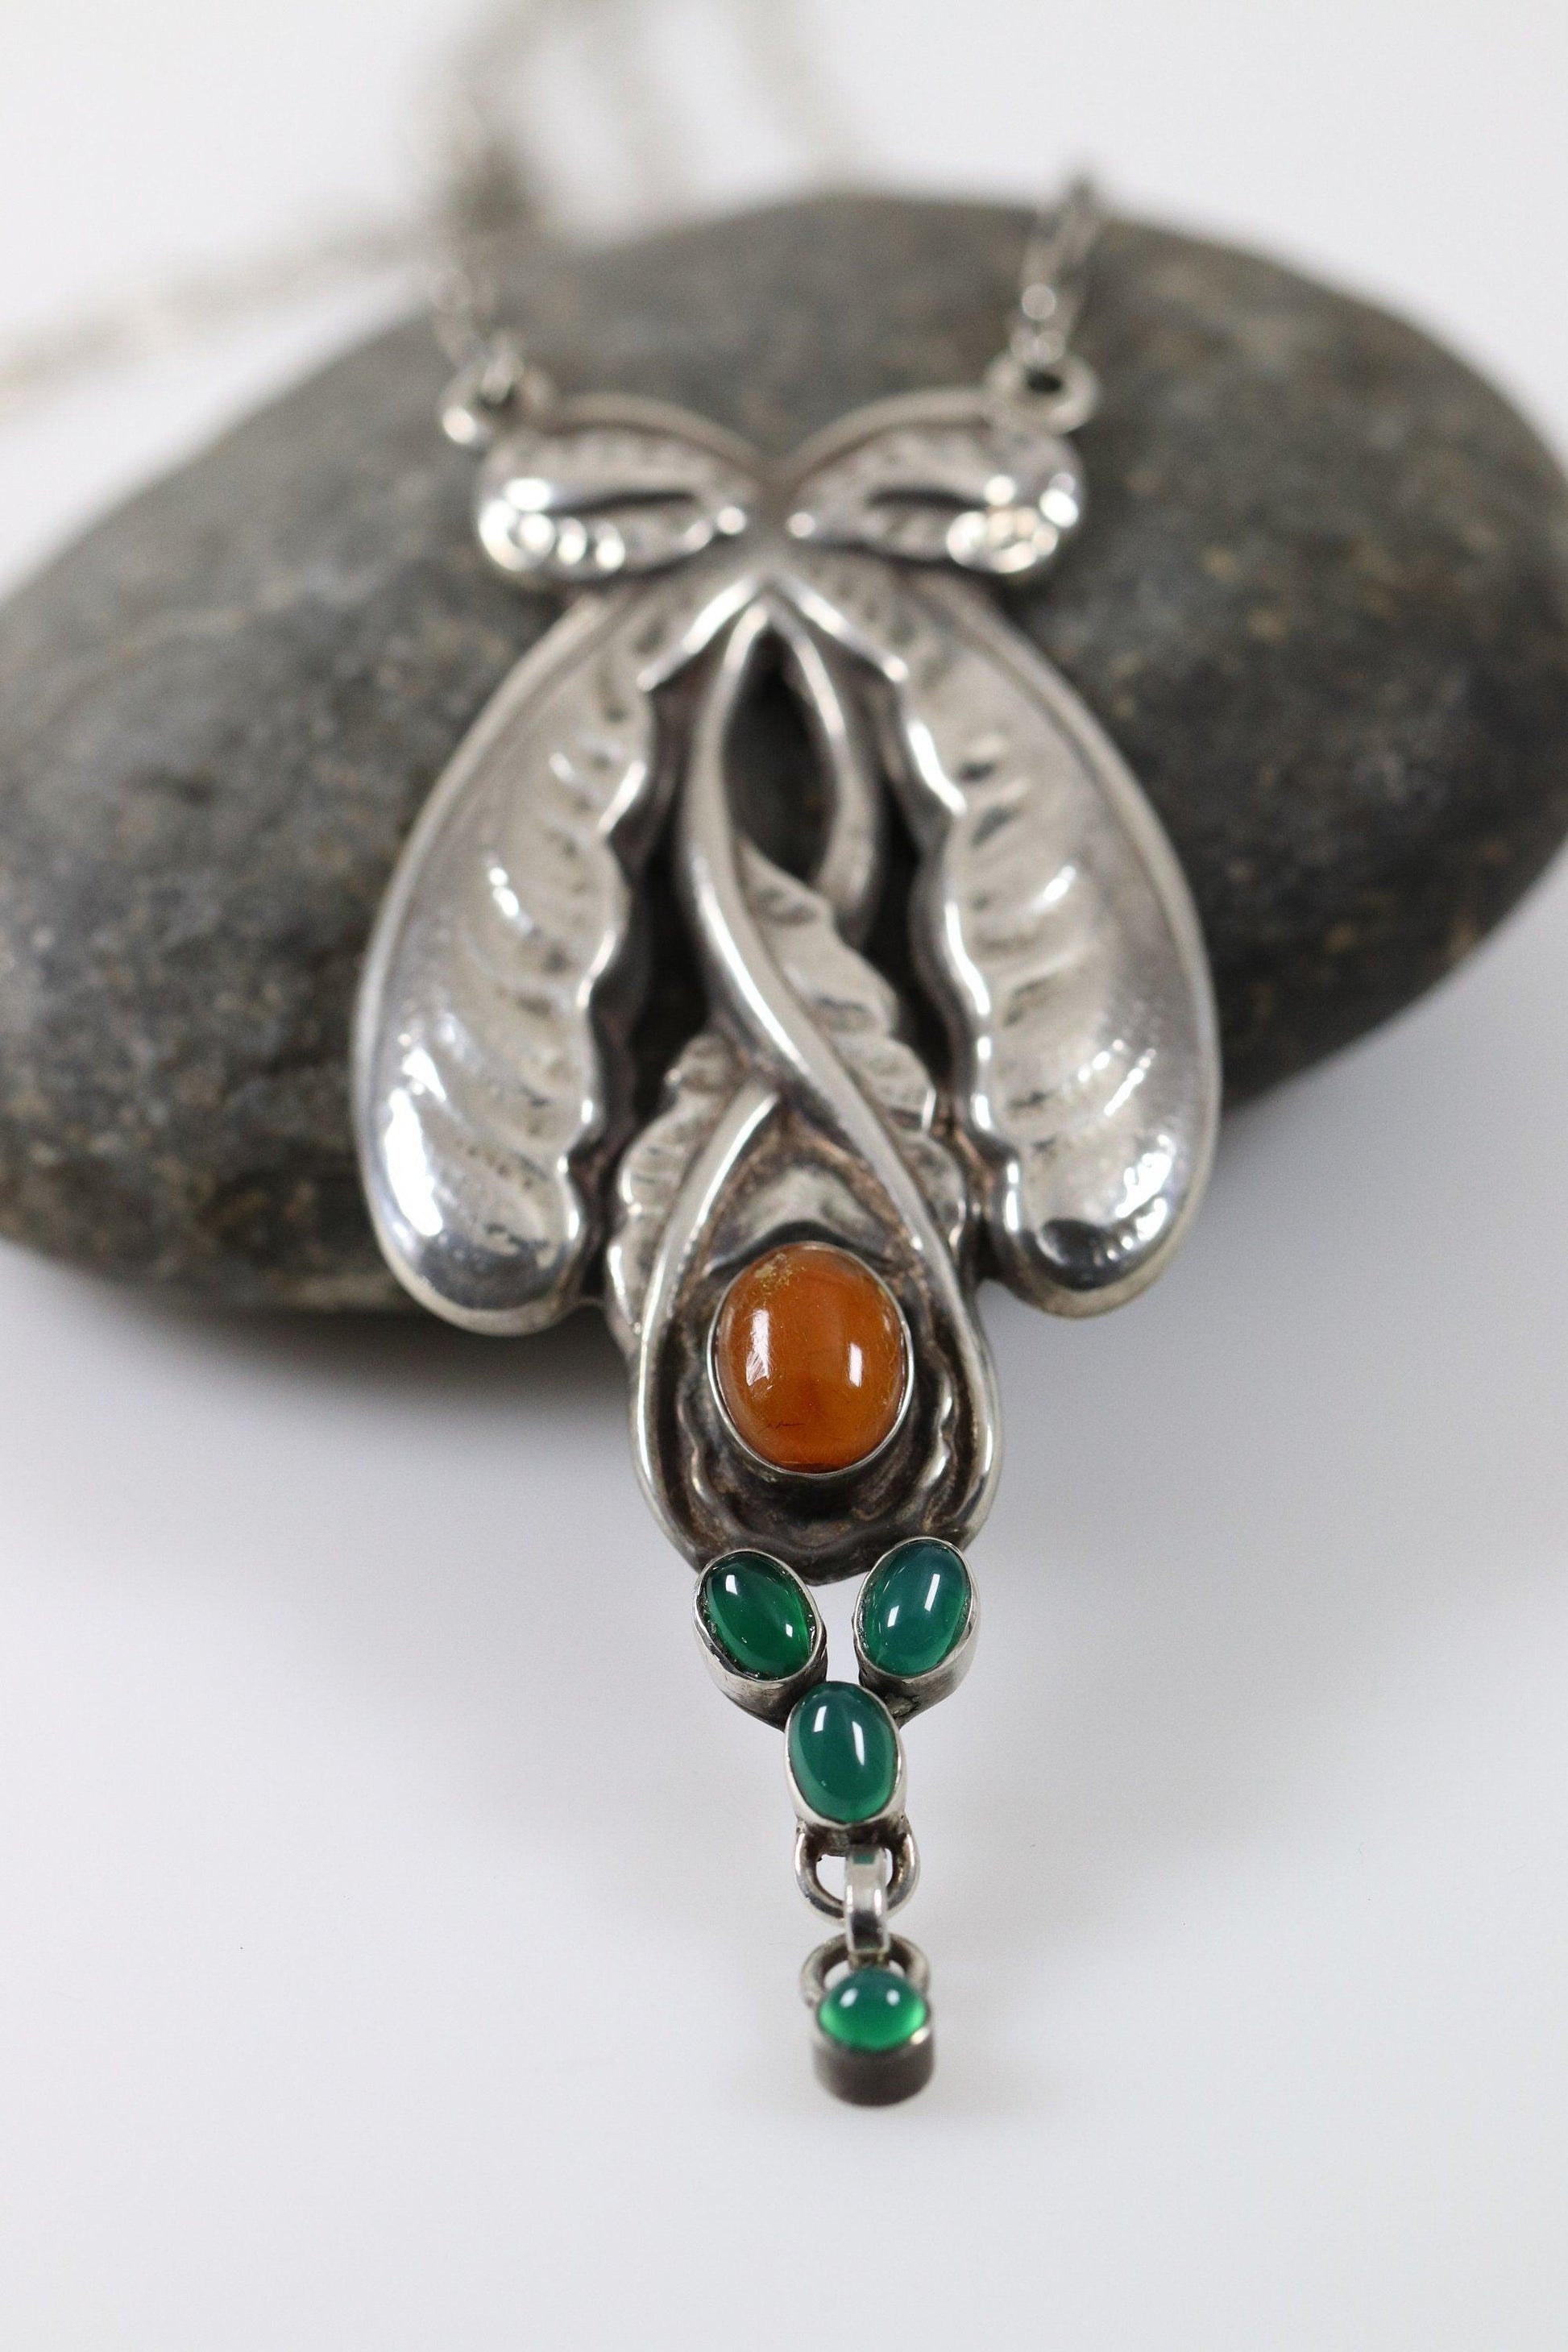 Georg Jensen Jewelry | Chrysorpase Amber Art Nouveau Silver Vintage Necklace 3 - Carmel Fine Silver Jewelry